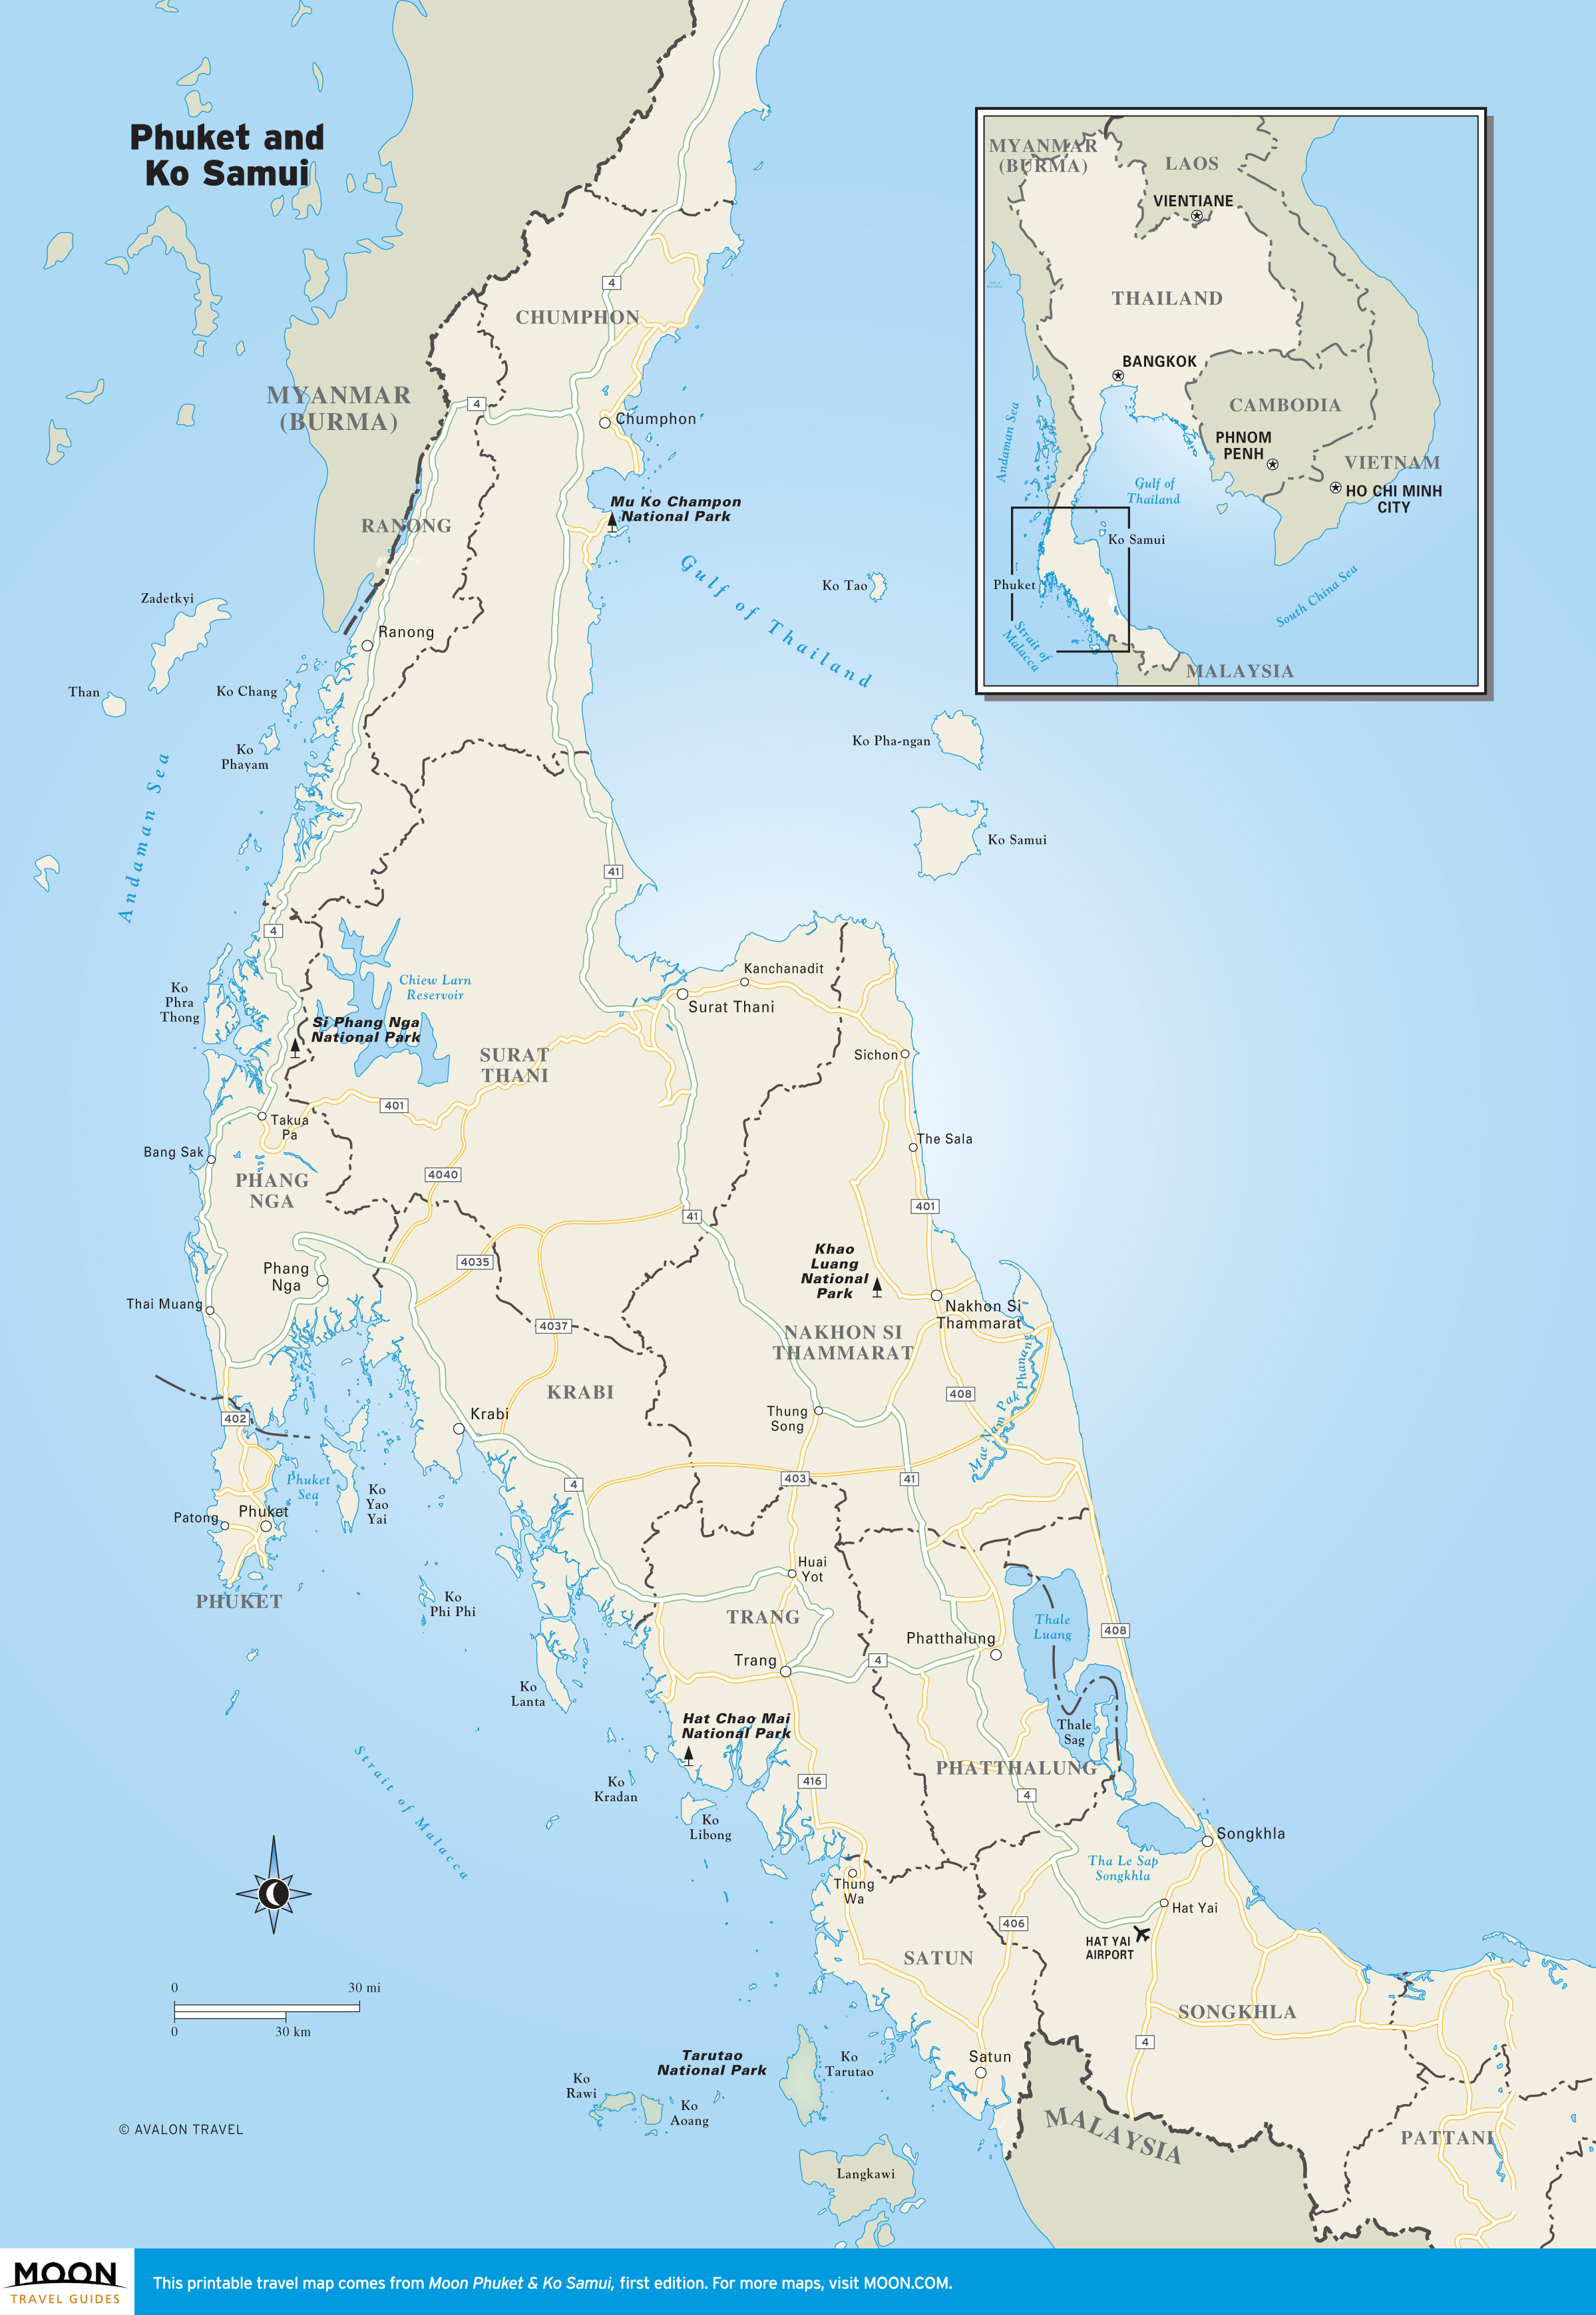 Travel map of the Phuket and Ko Samui region of Thailand